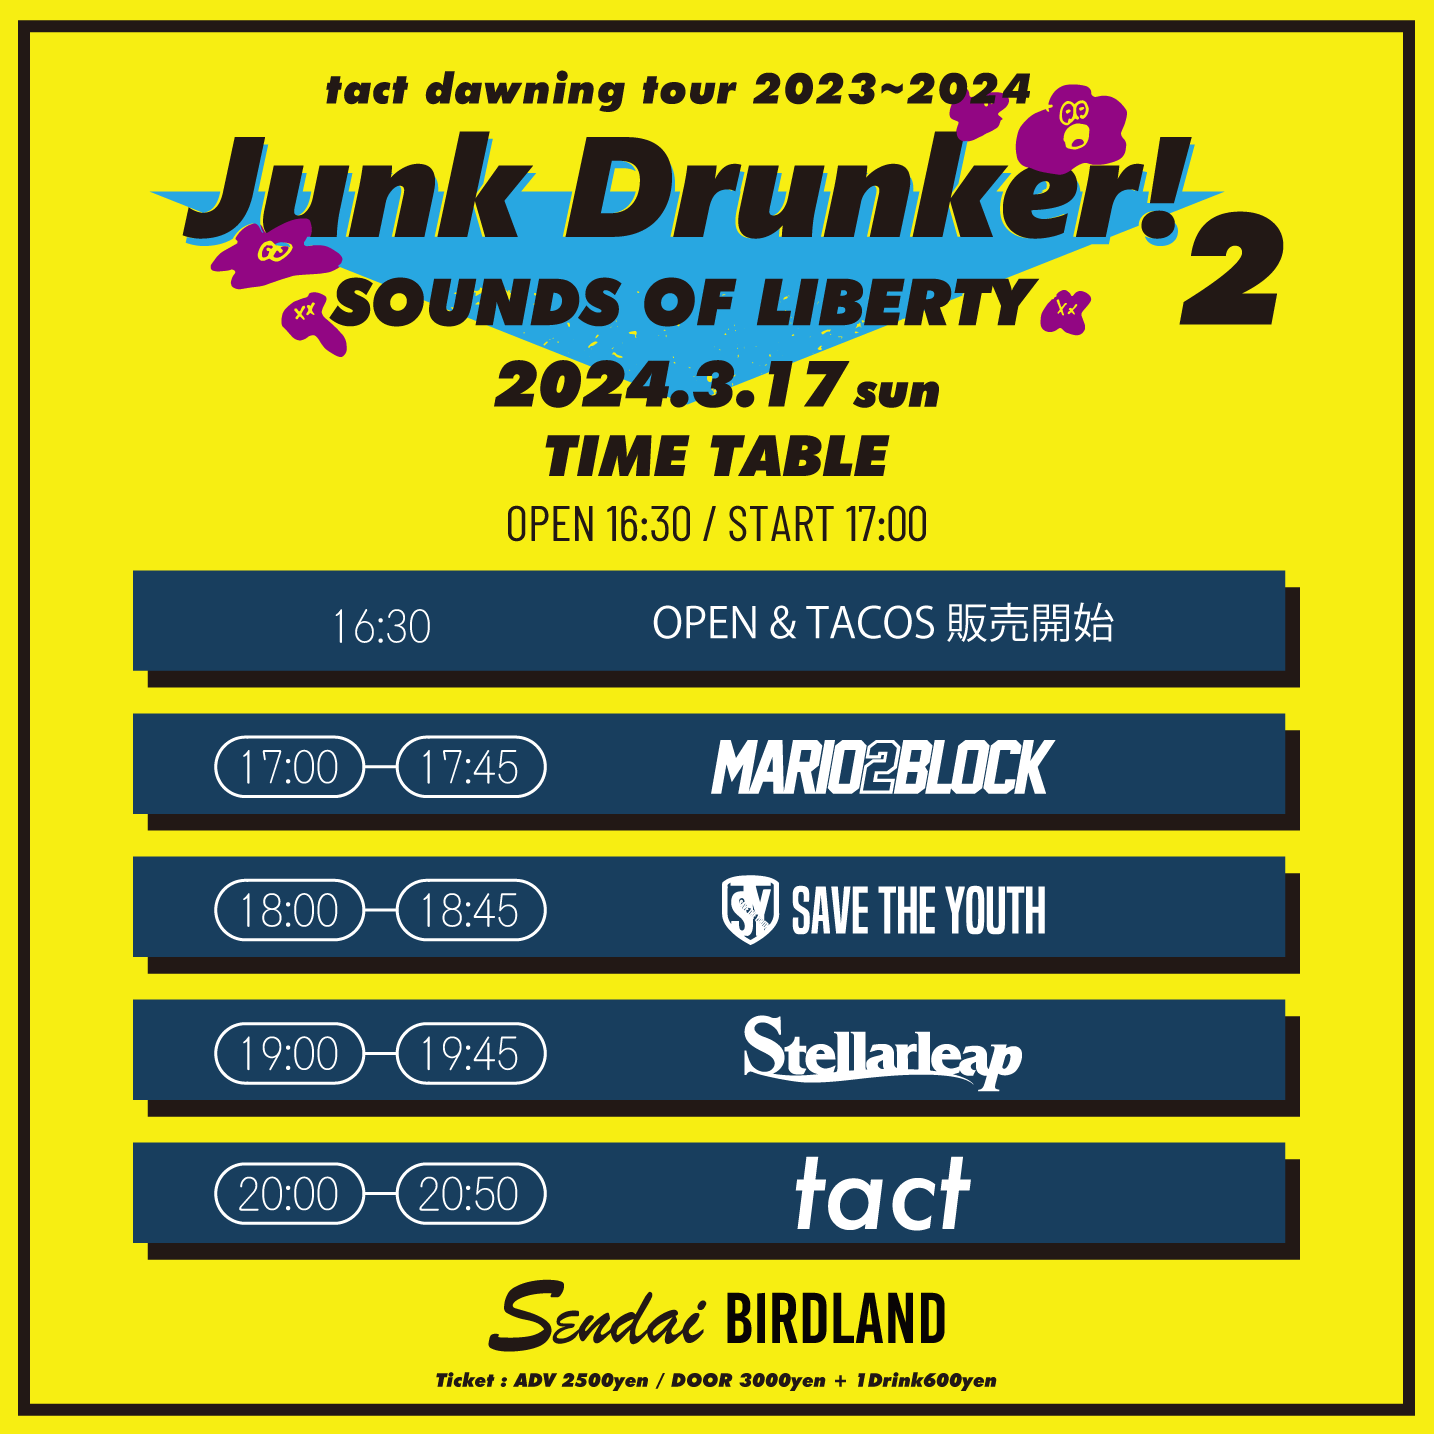 Junk Drunker! 2 SOUNDS OF LIBERTY